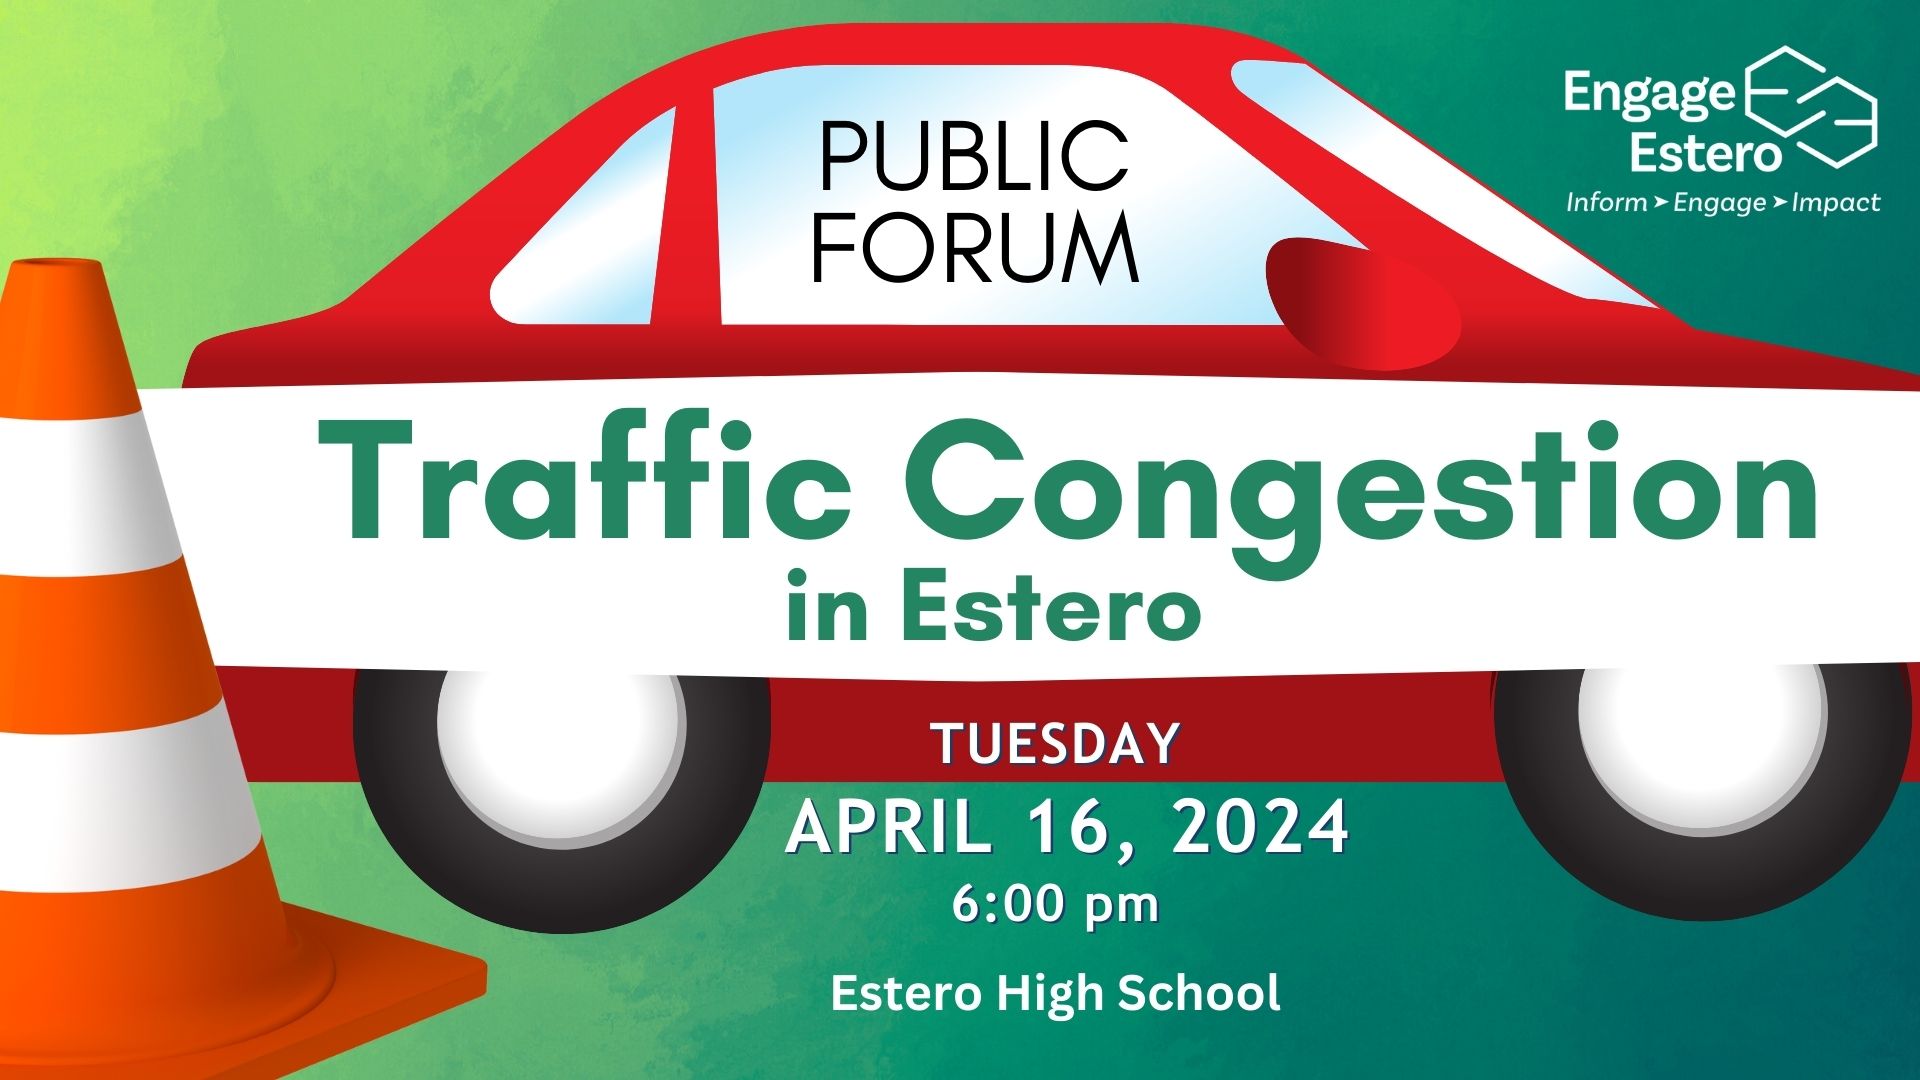 Engage Estero’s Public Forum on Traffic Congestion